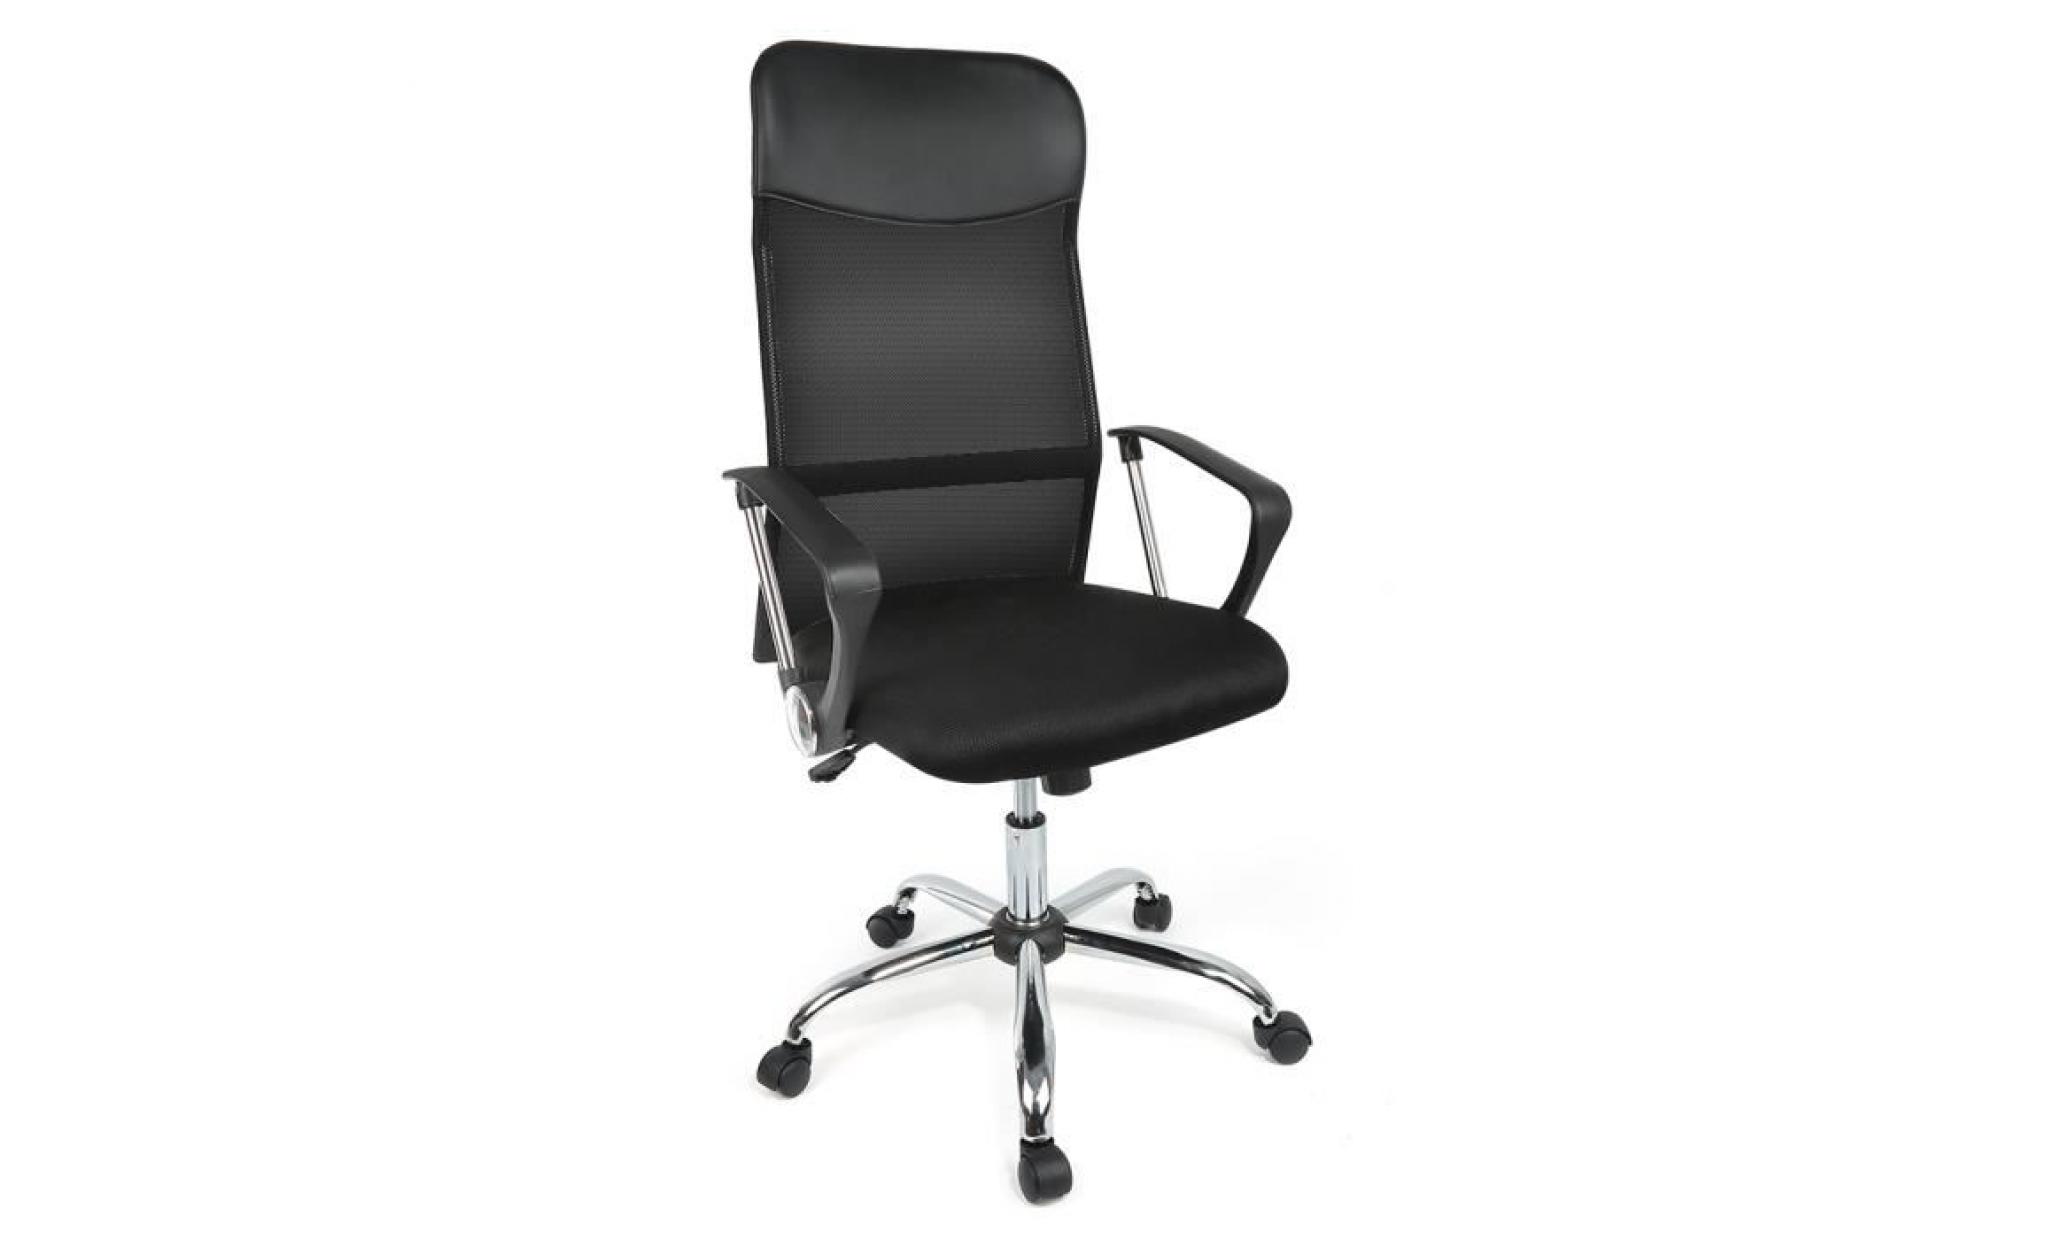 kangfun fauteuil de bureau en tissu noir, chaise de bureau inclinable ergonomique design moderne